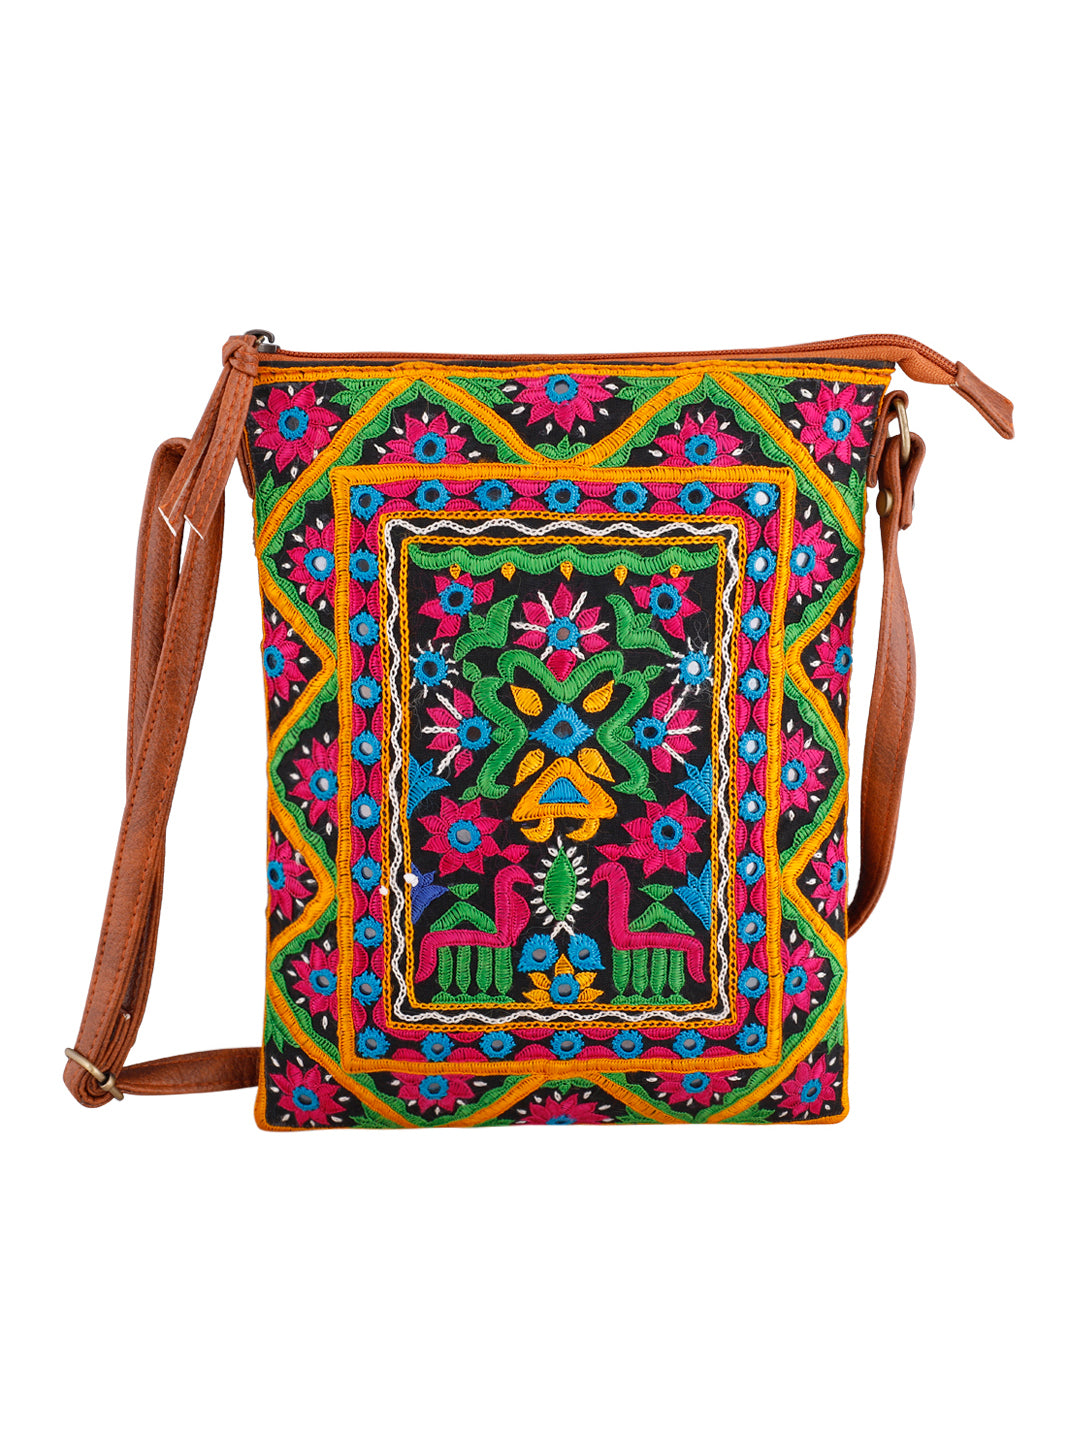 Hippie bag Hobo purse Crossbody bag Gypsy bag, cross body purse sling bag ,shoulder bags for women hand embroidered